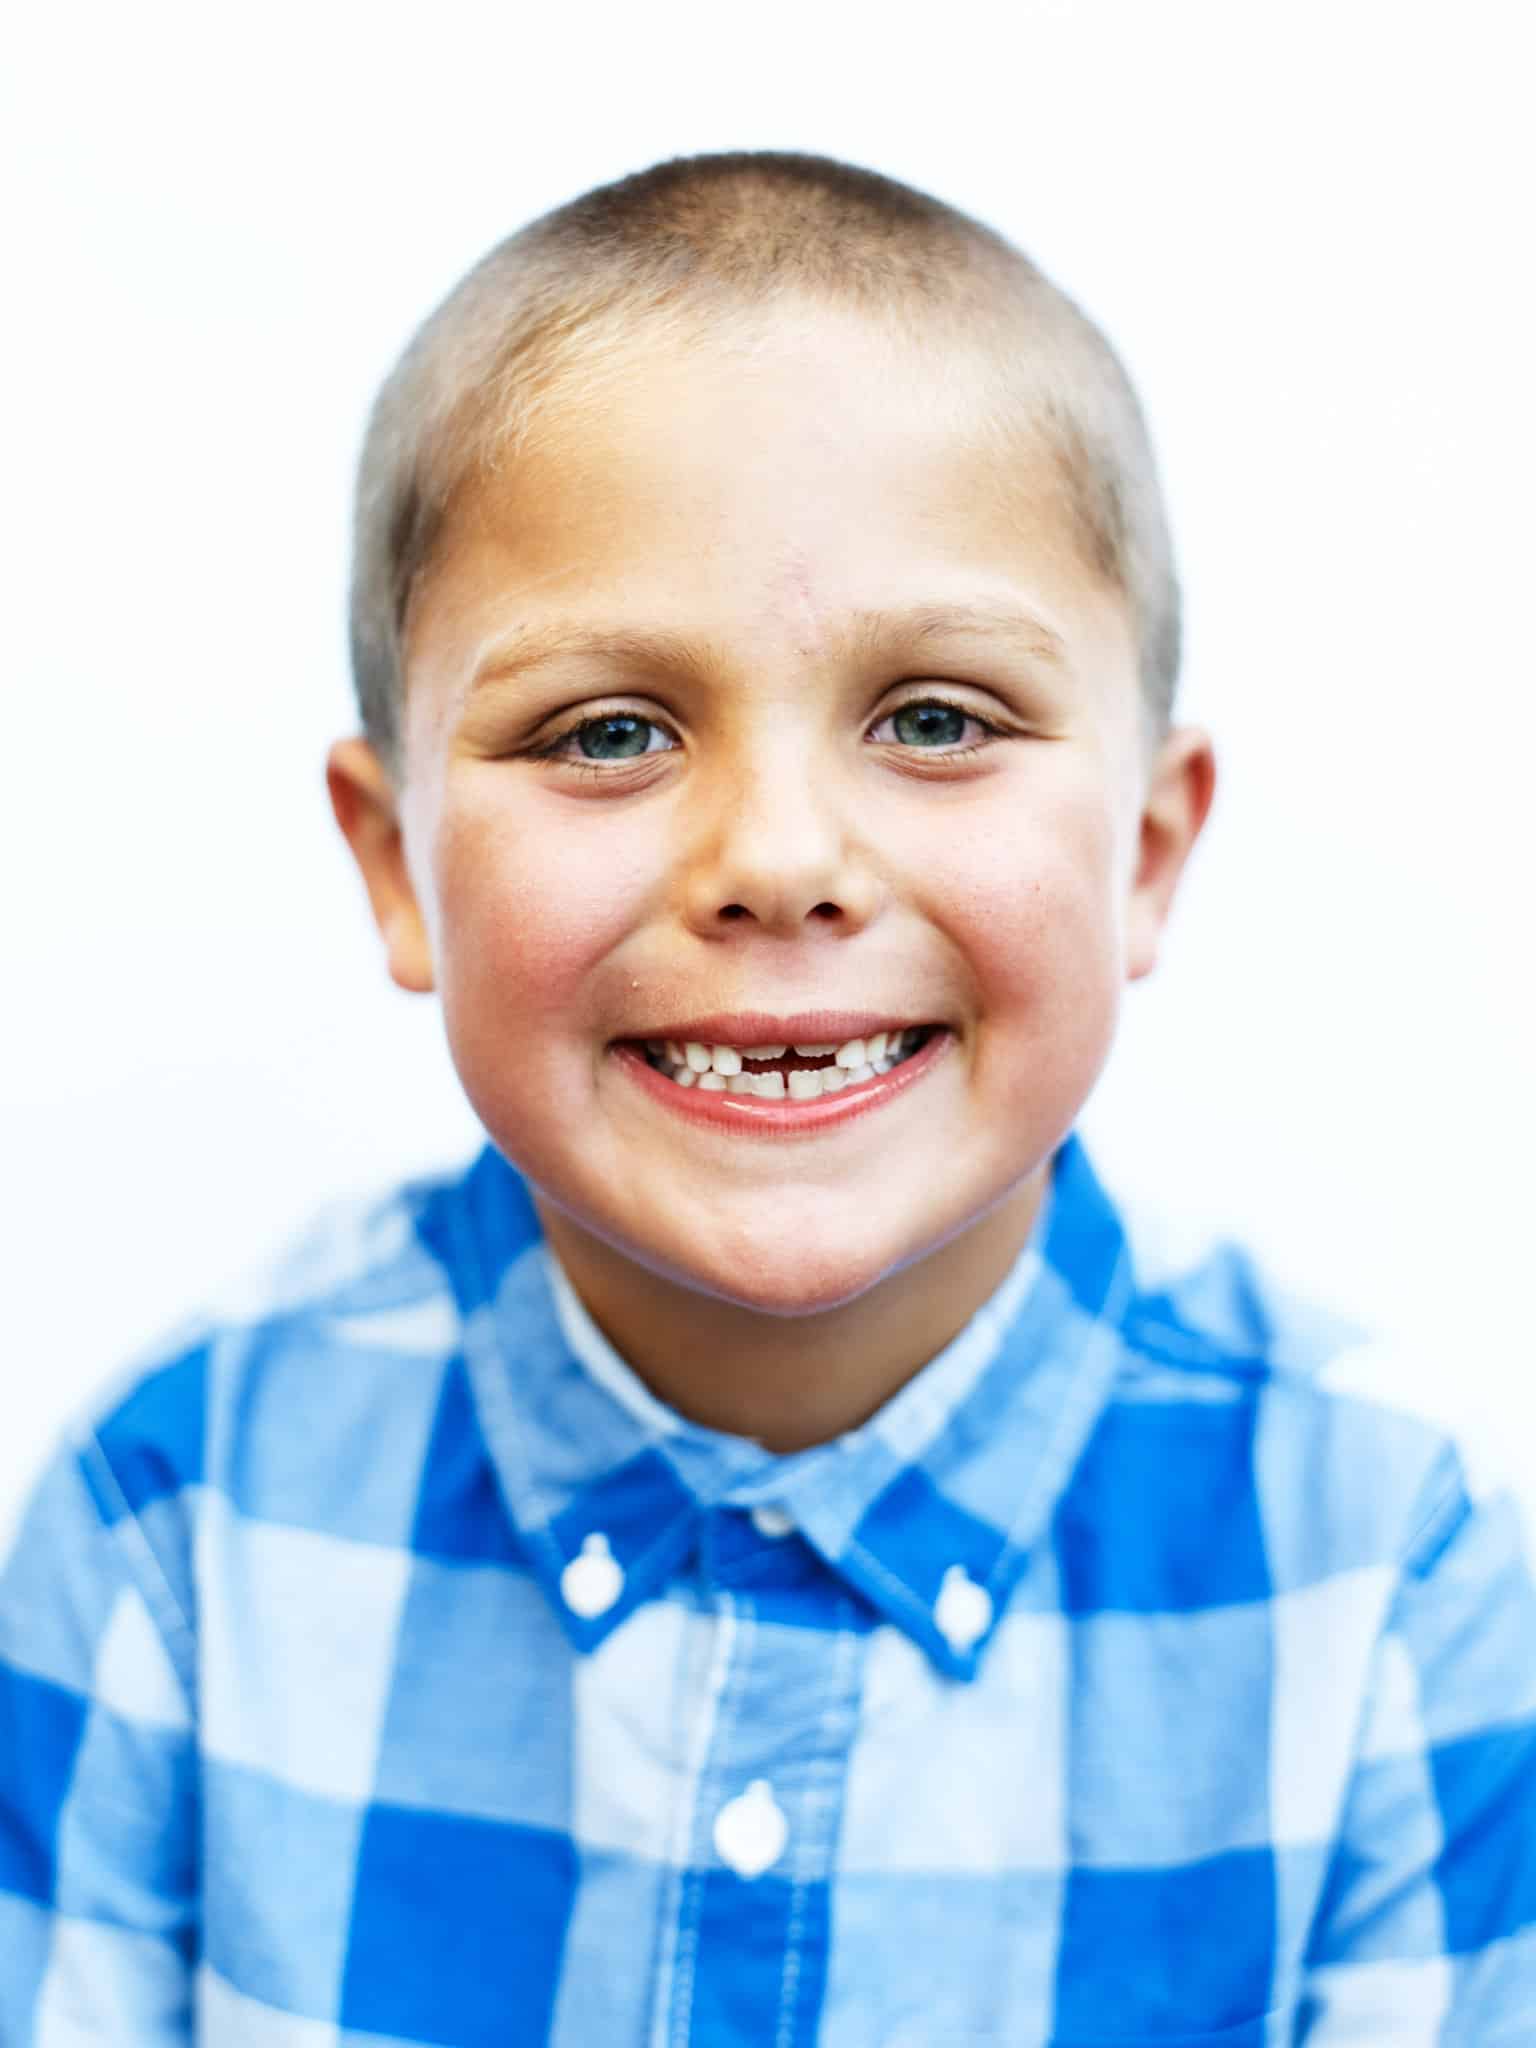 boy with missing teeth posing for potrait